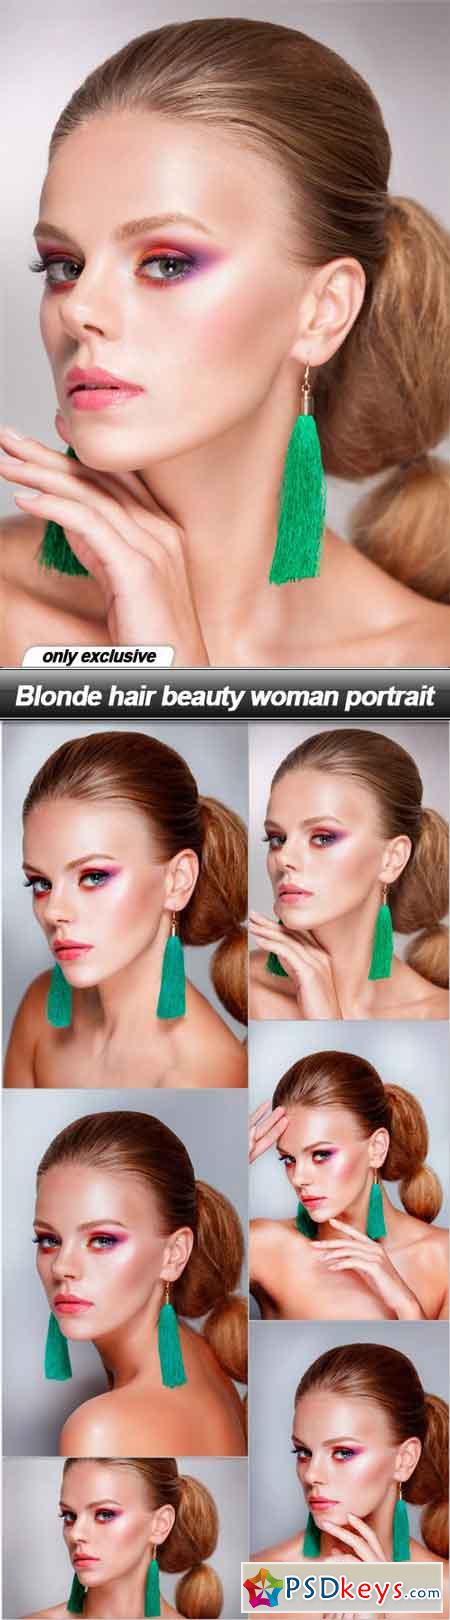 Blonde hair beauty woman portrait - 6 UHQ JPEG